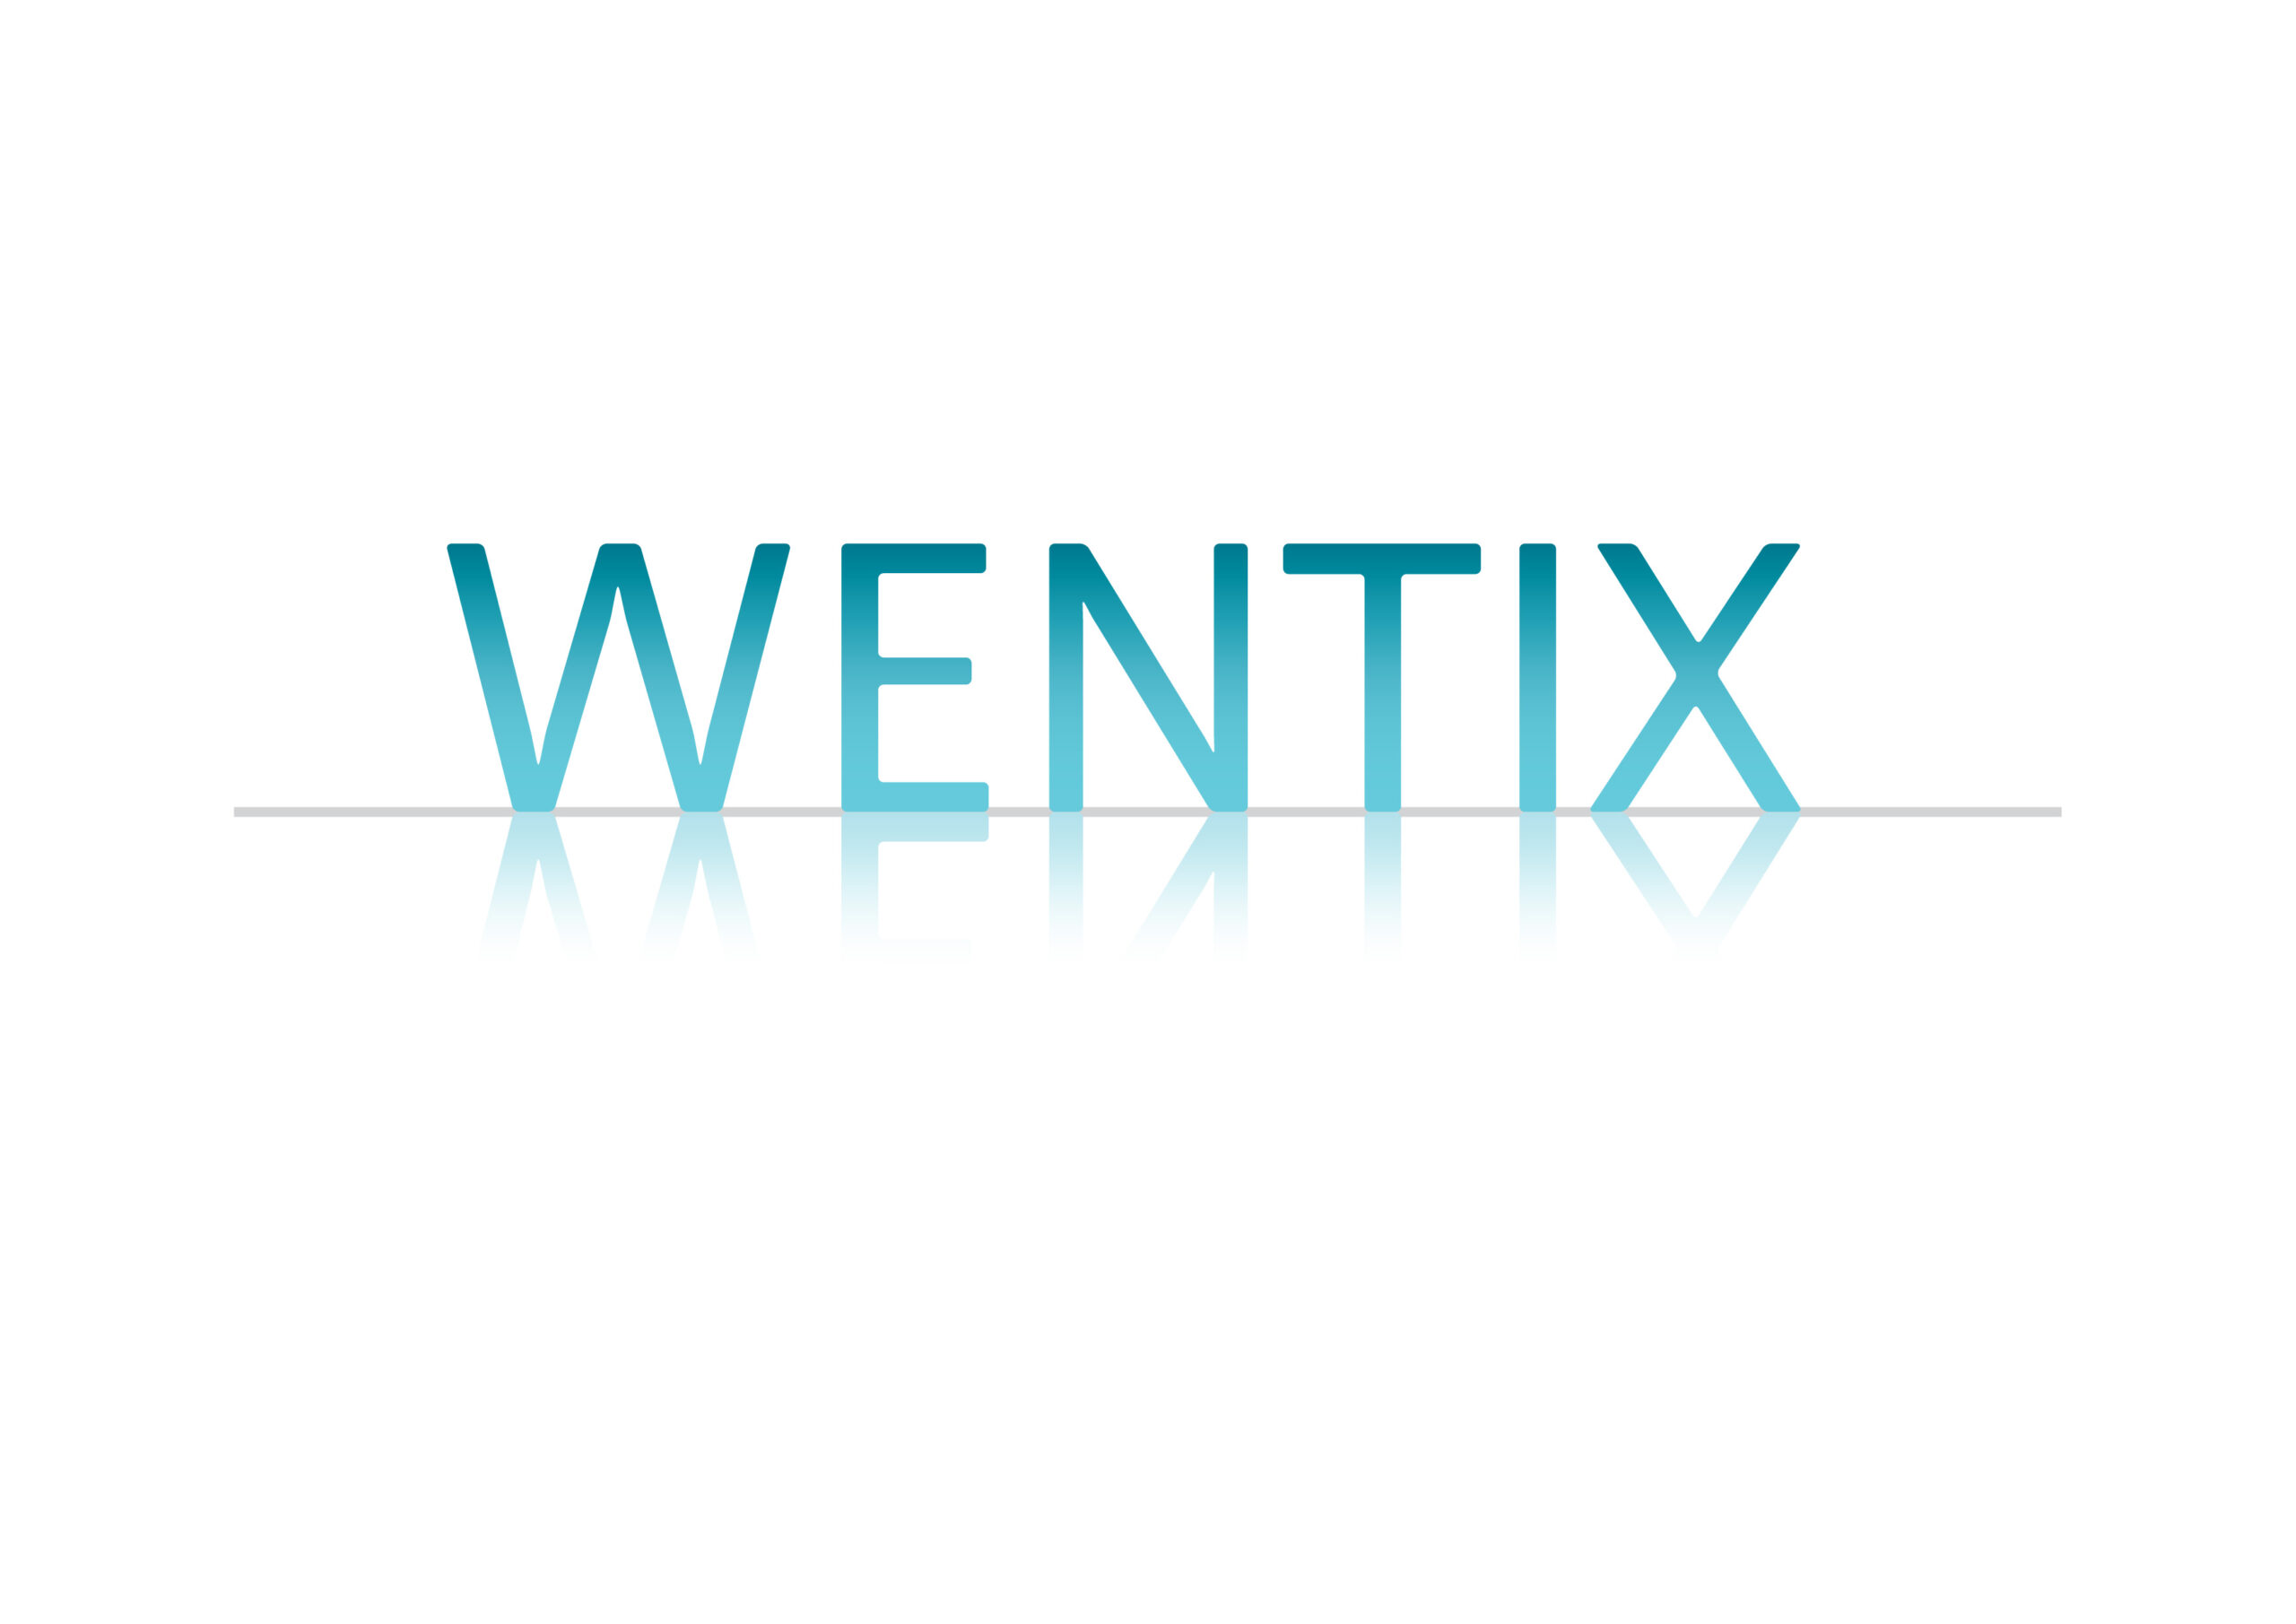 WENTX_logo-01